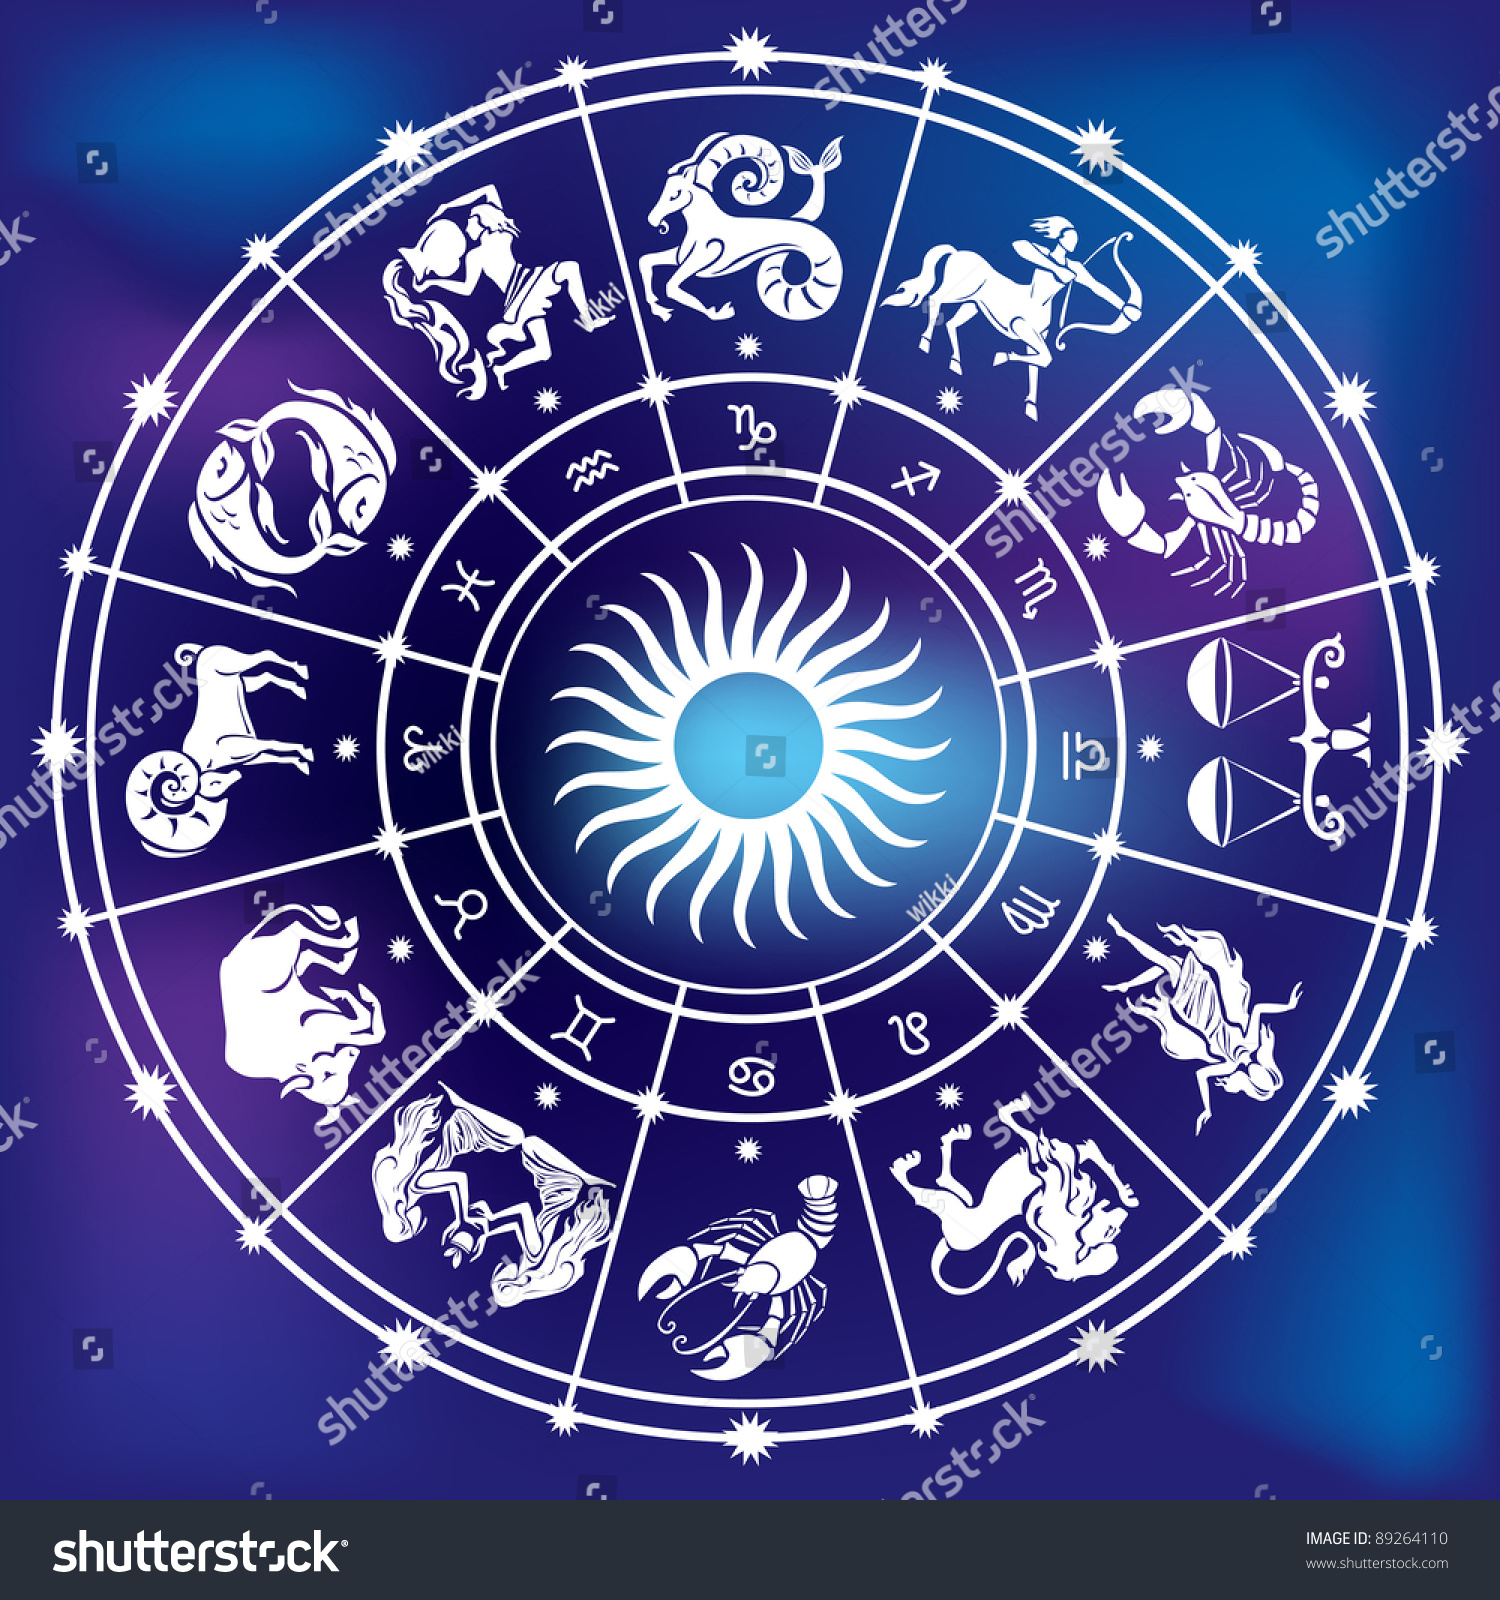 Horoscope Circle Stock Vector Illustration 89264110 : Shutterstock